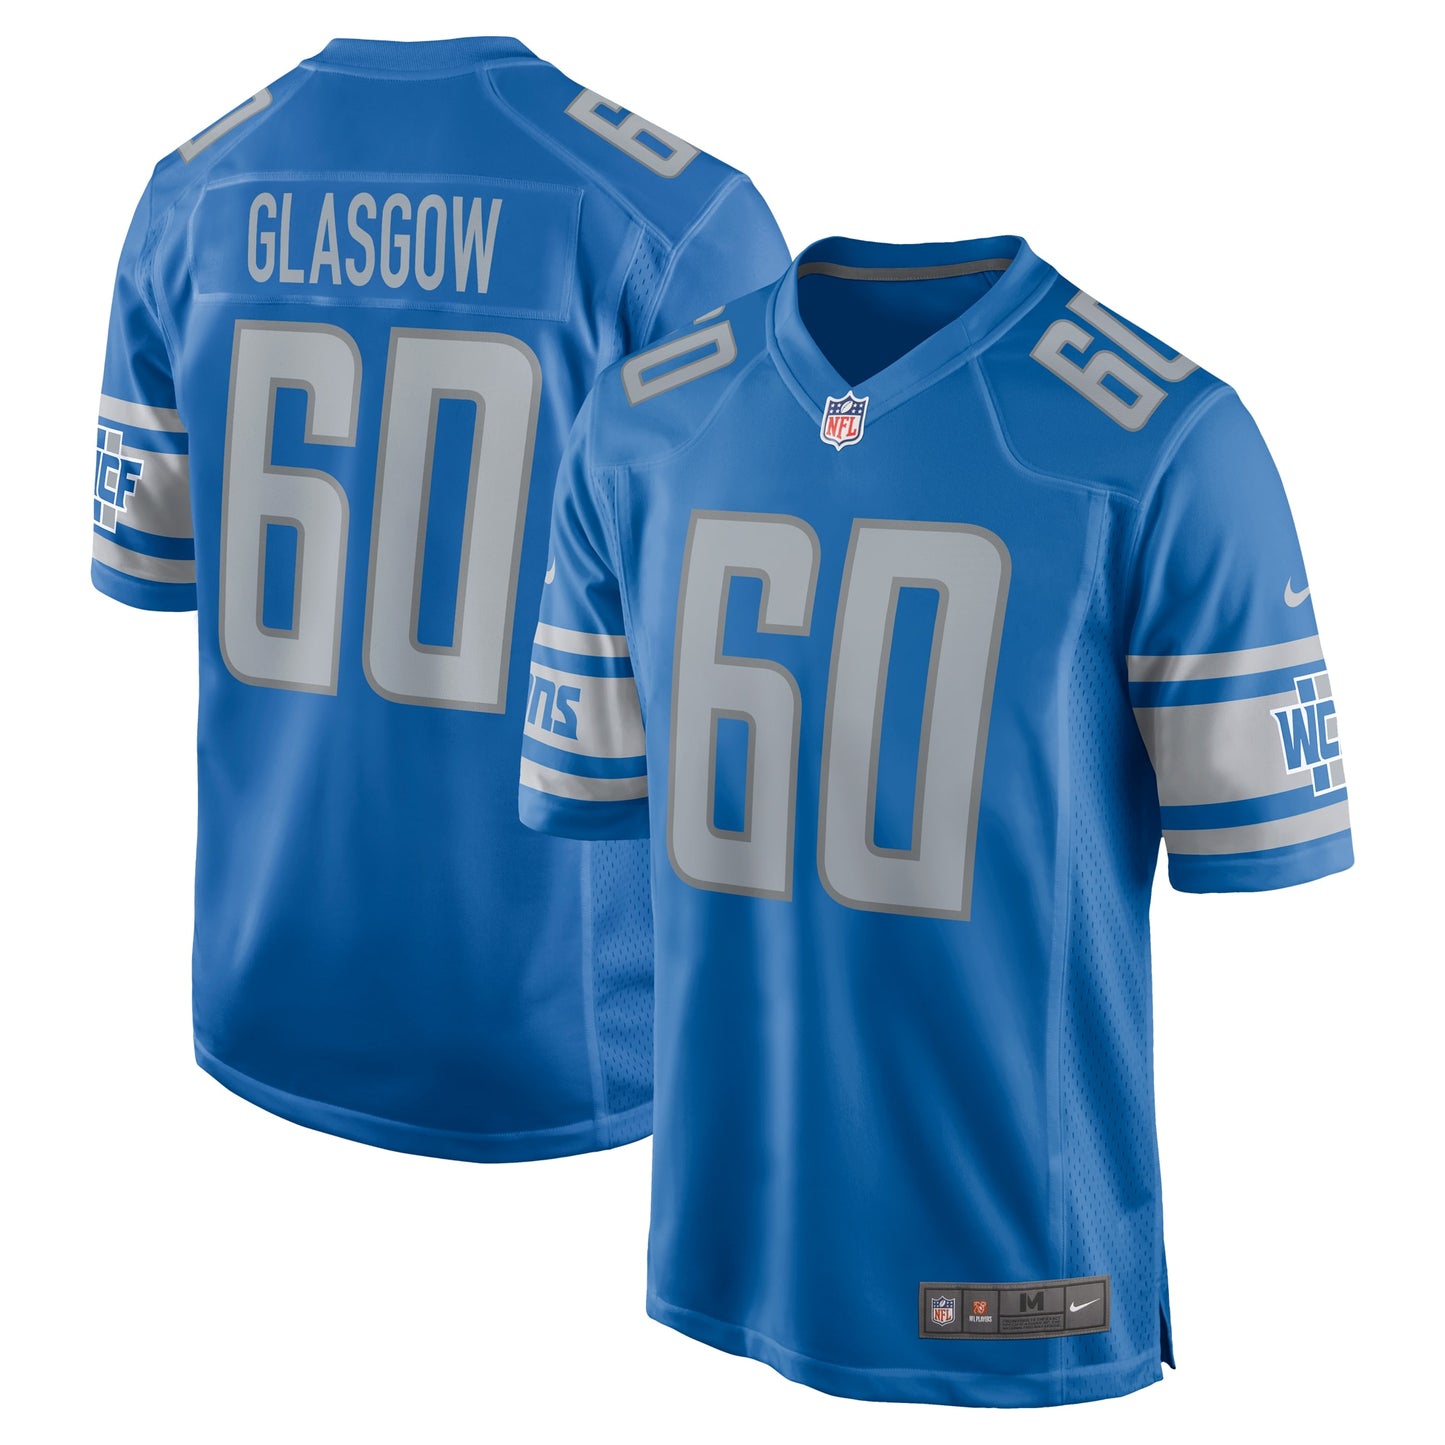 Graham Glasgow Detroit Lions Nike Game Jersey - Blue